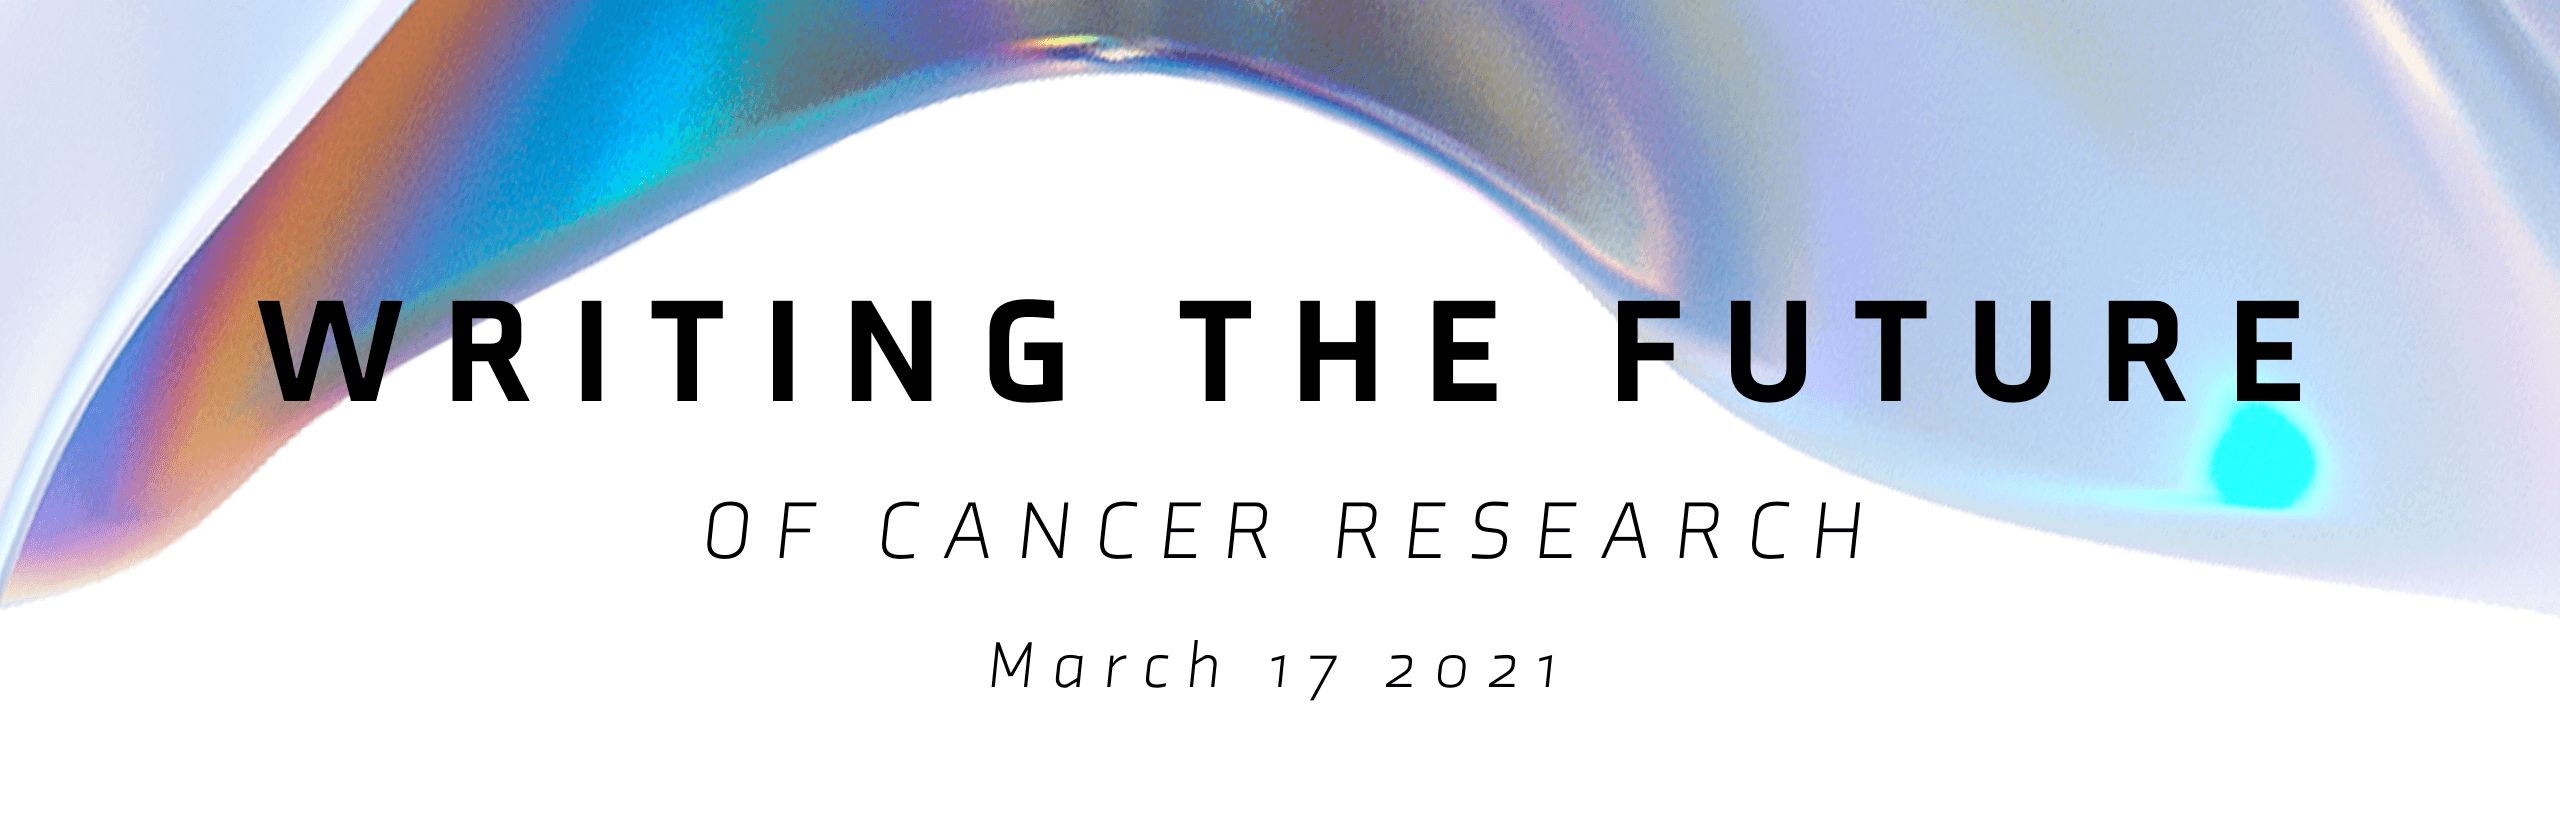 Vorschau zum Live-Symposium: Writing the Future of Cancer Research